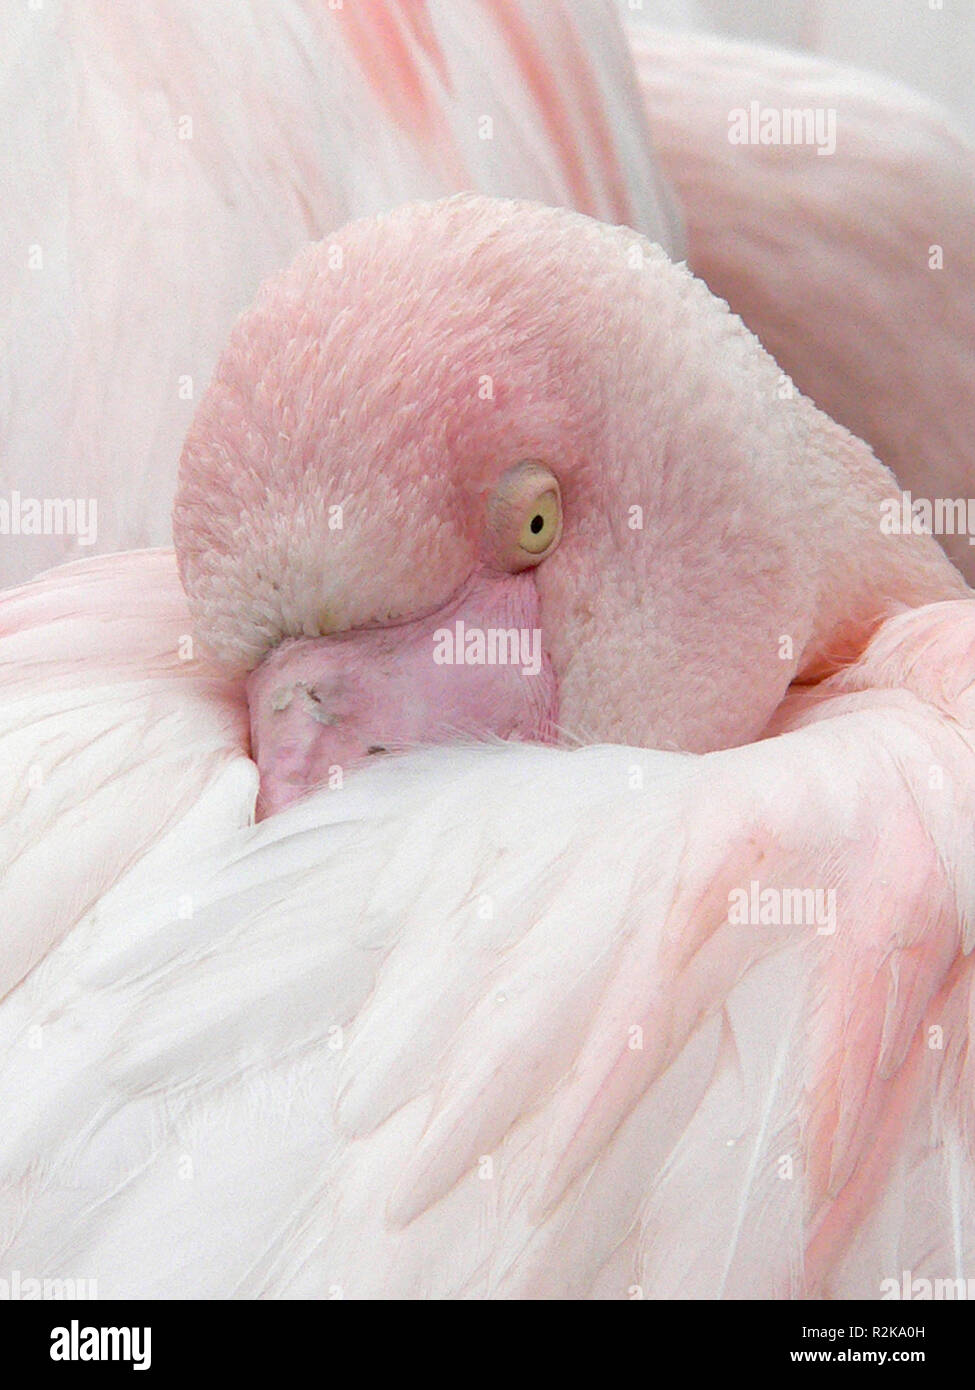 pink flamingo Stock Photo